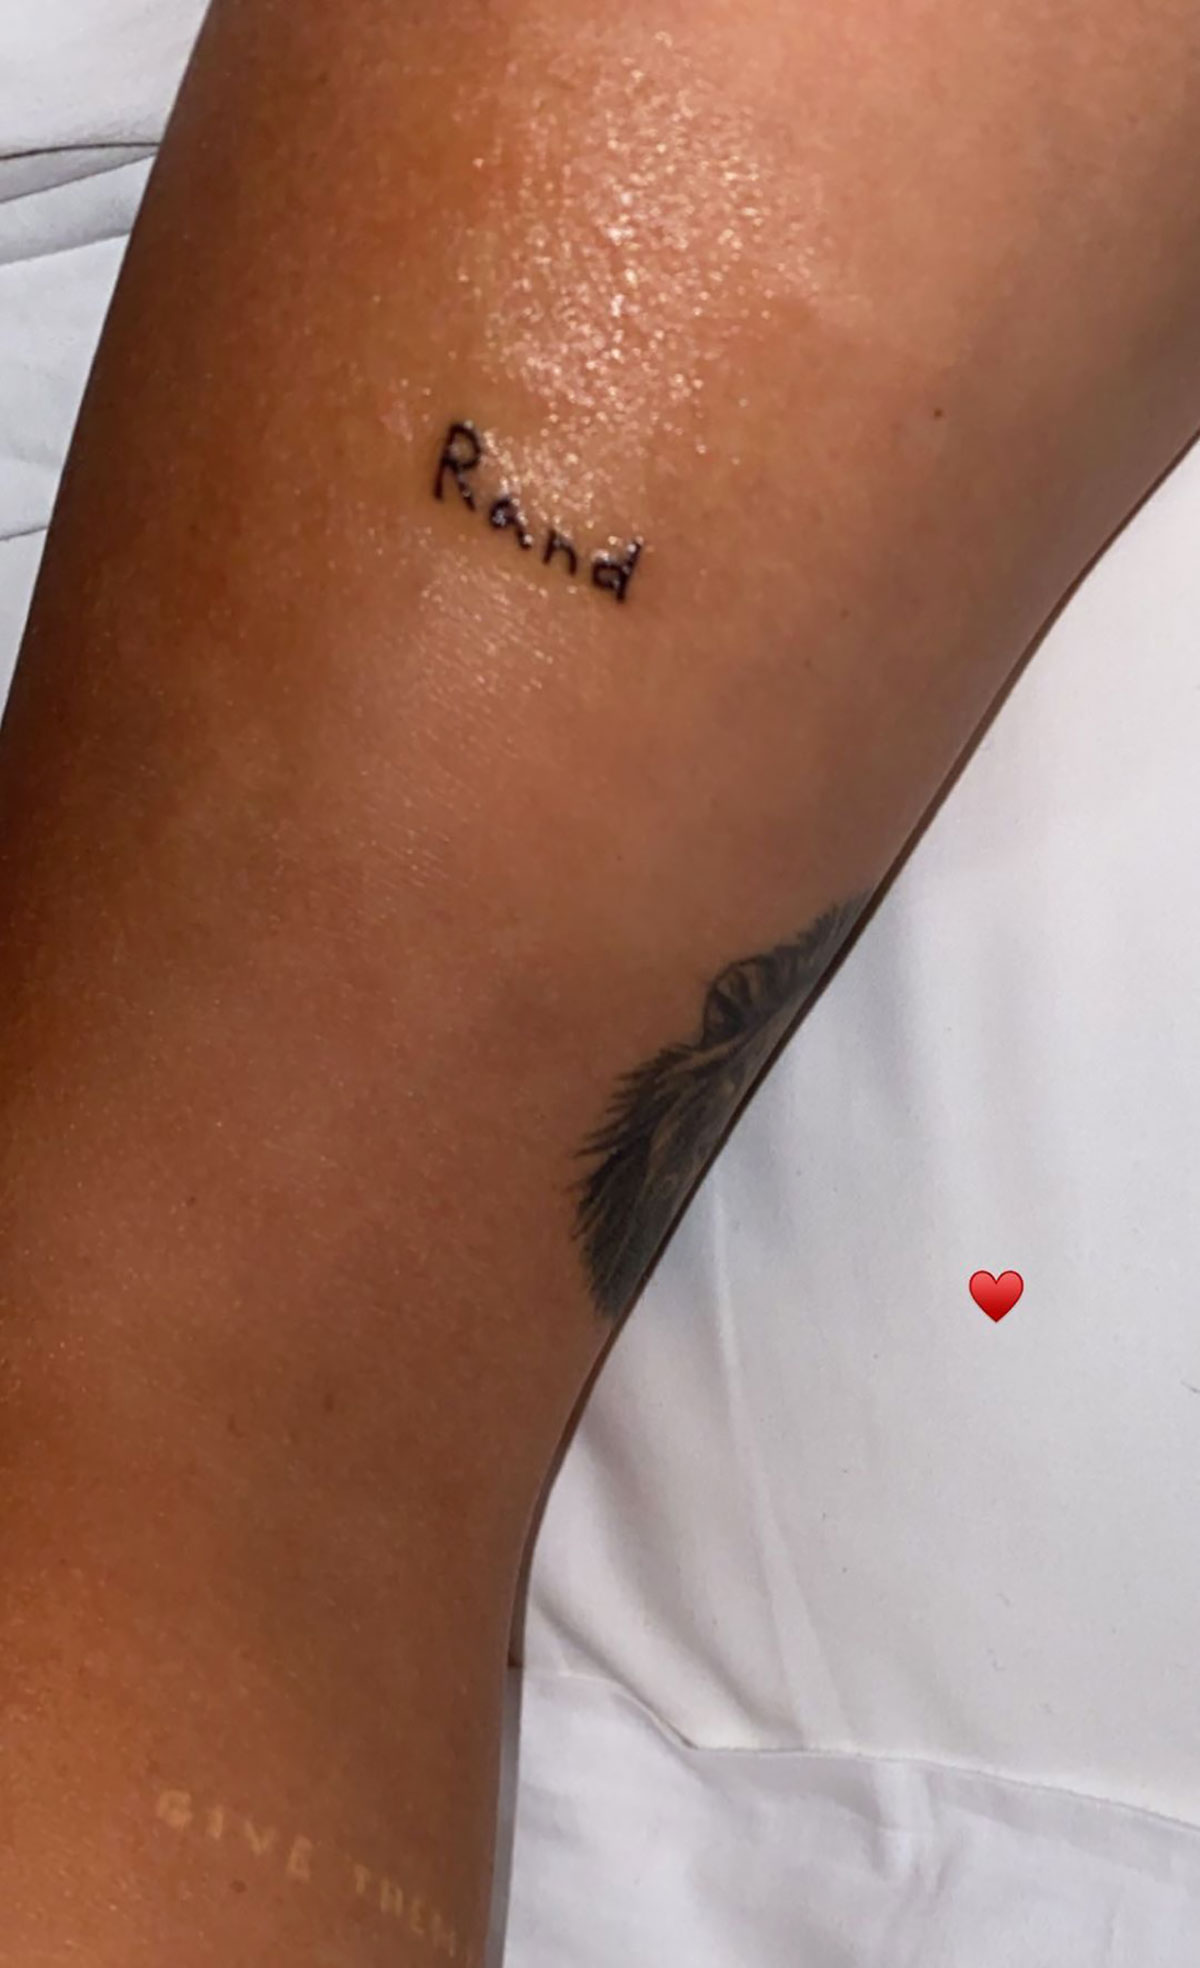 Lala Kent Gets 'Rand' Arm Tattoo for Fiance Randall Emmett Pic